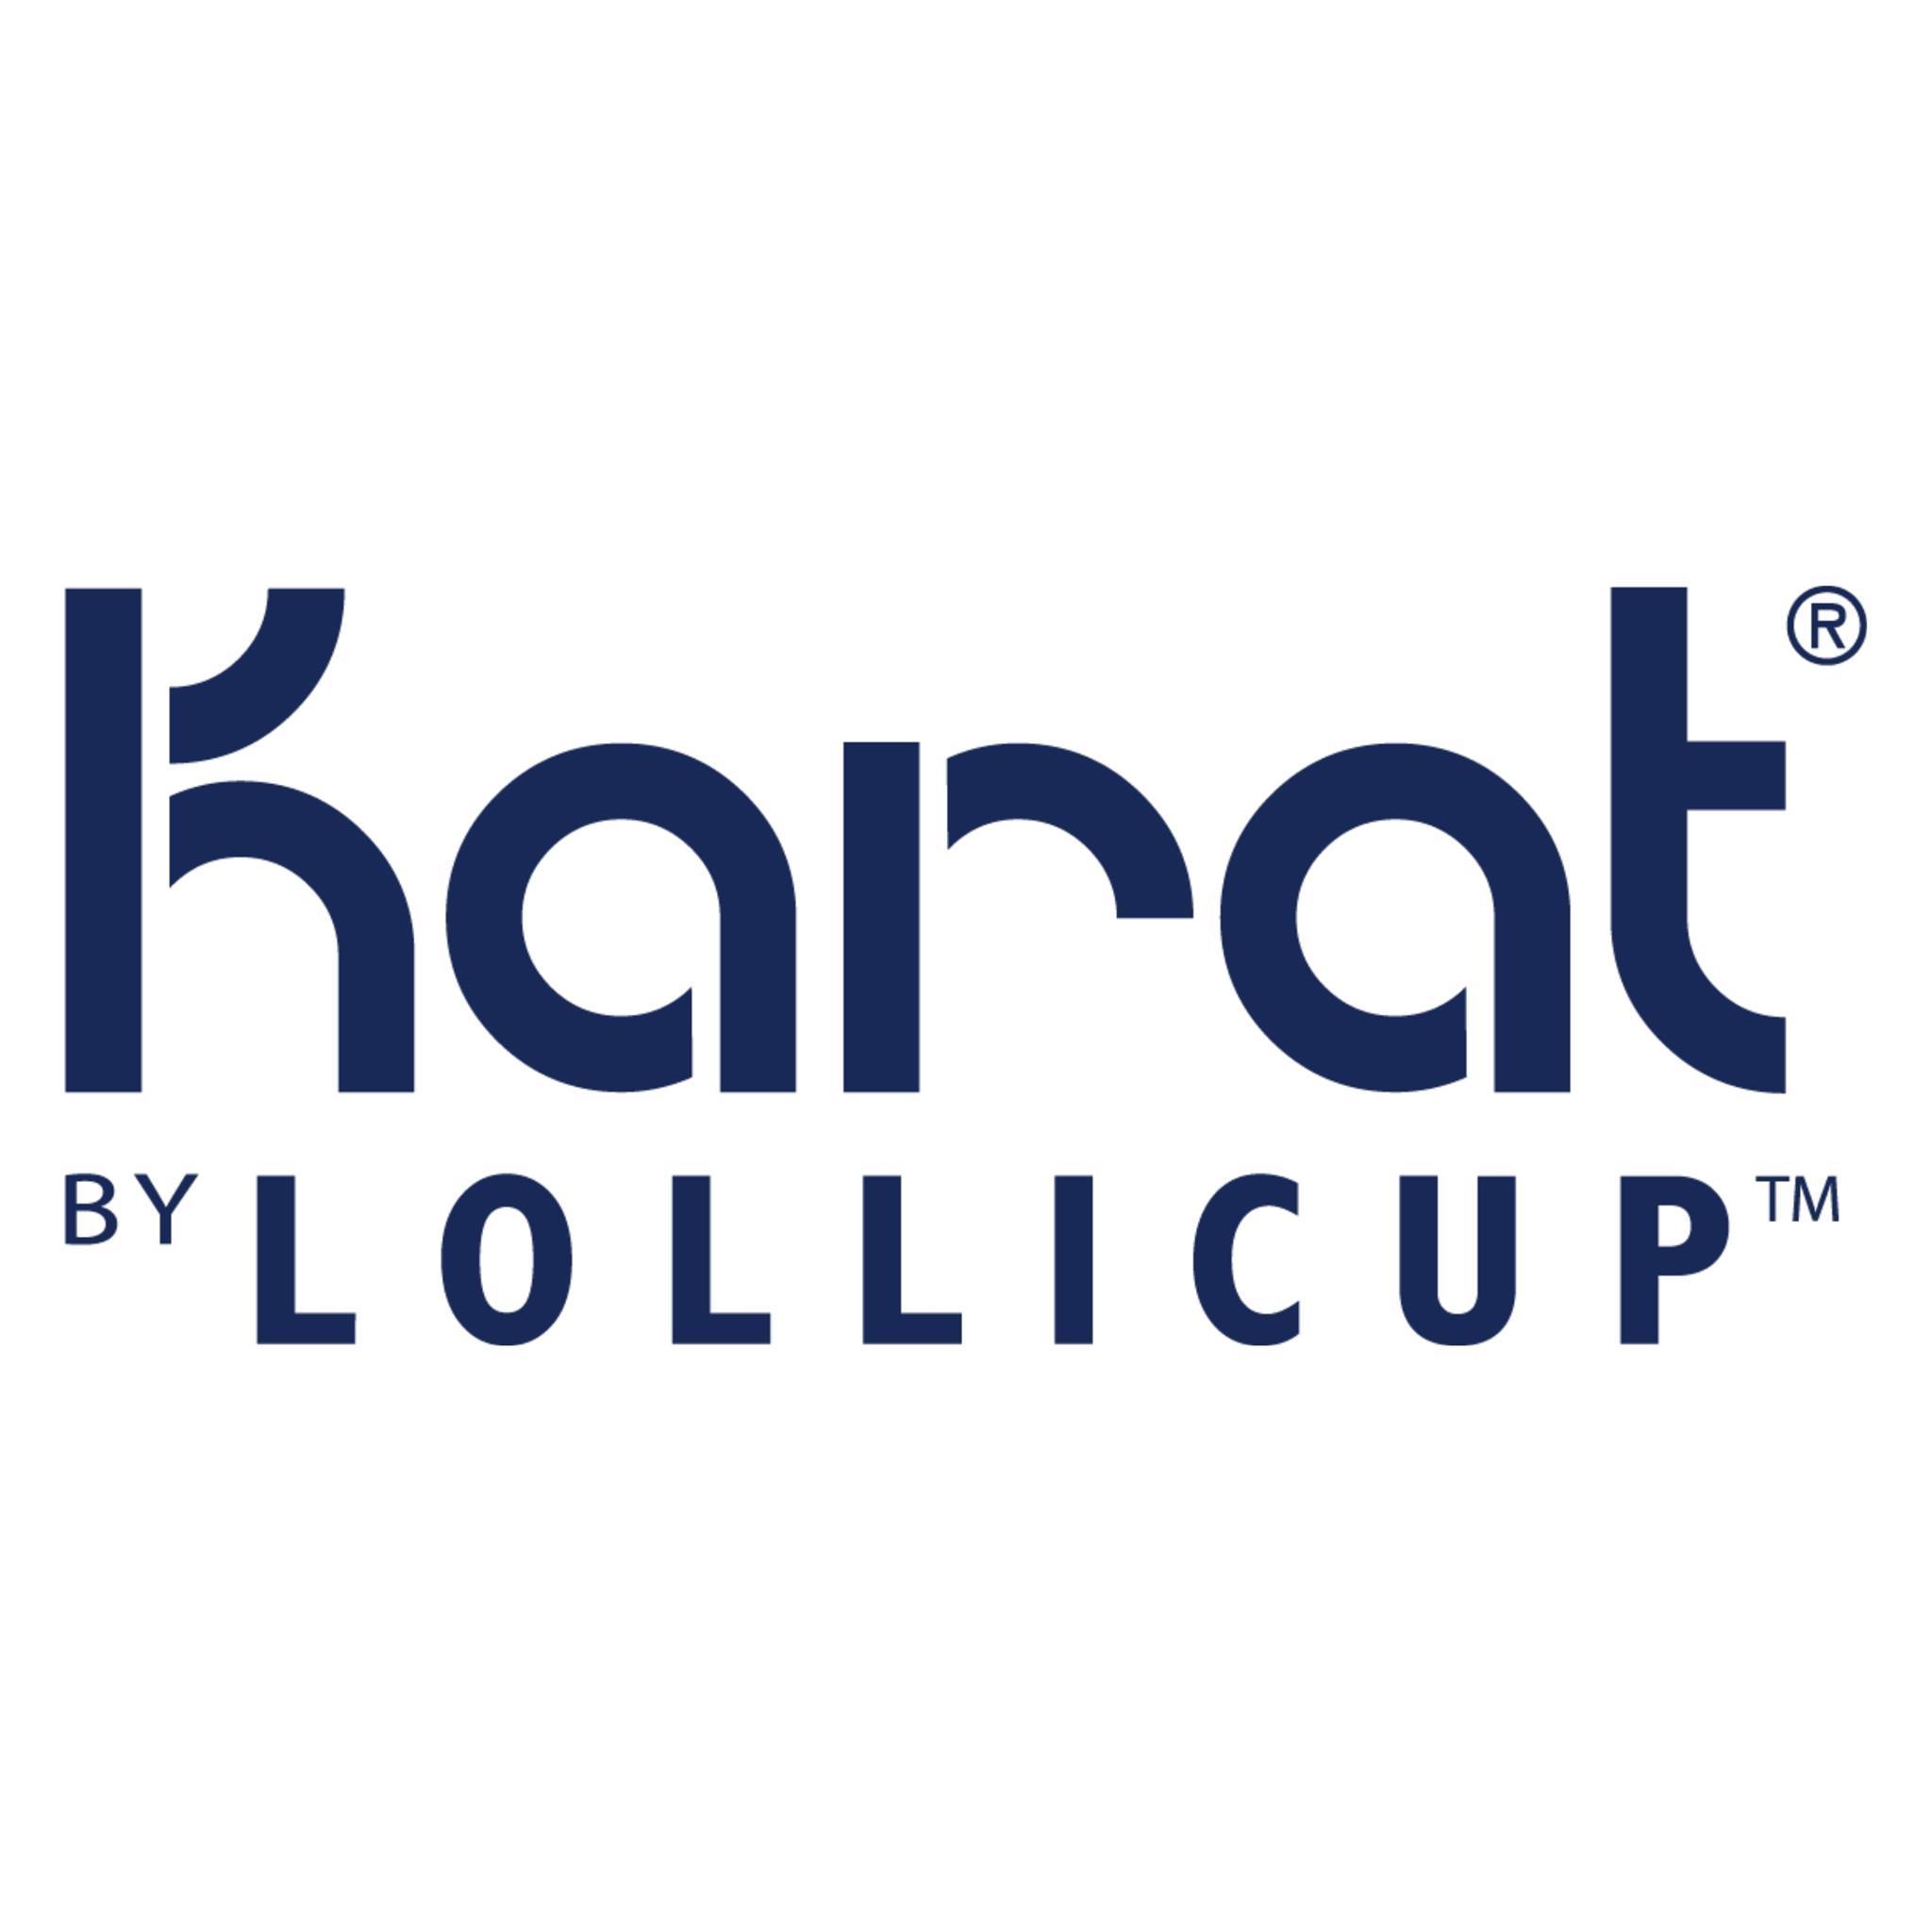 Karat by Lollicup